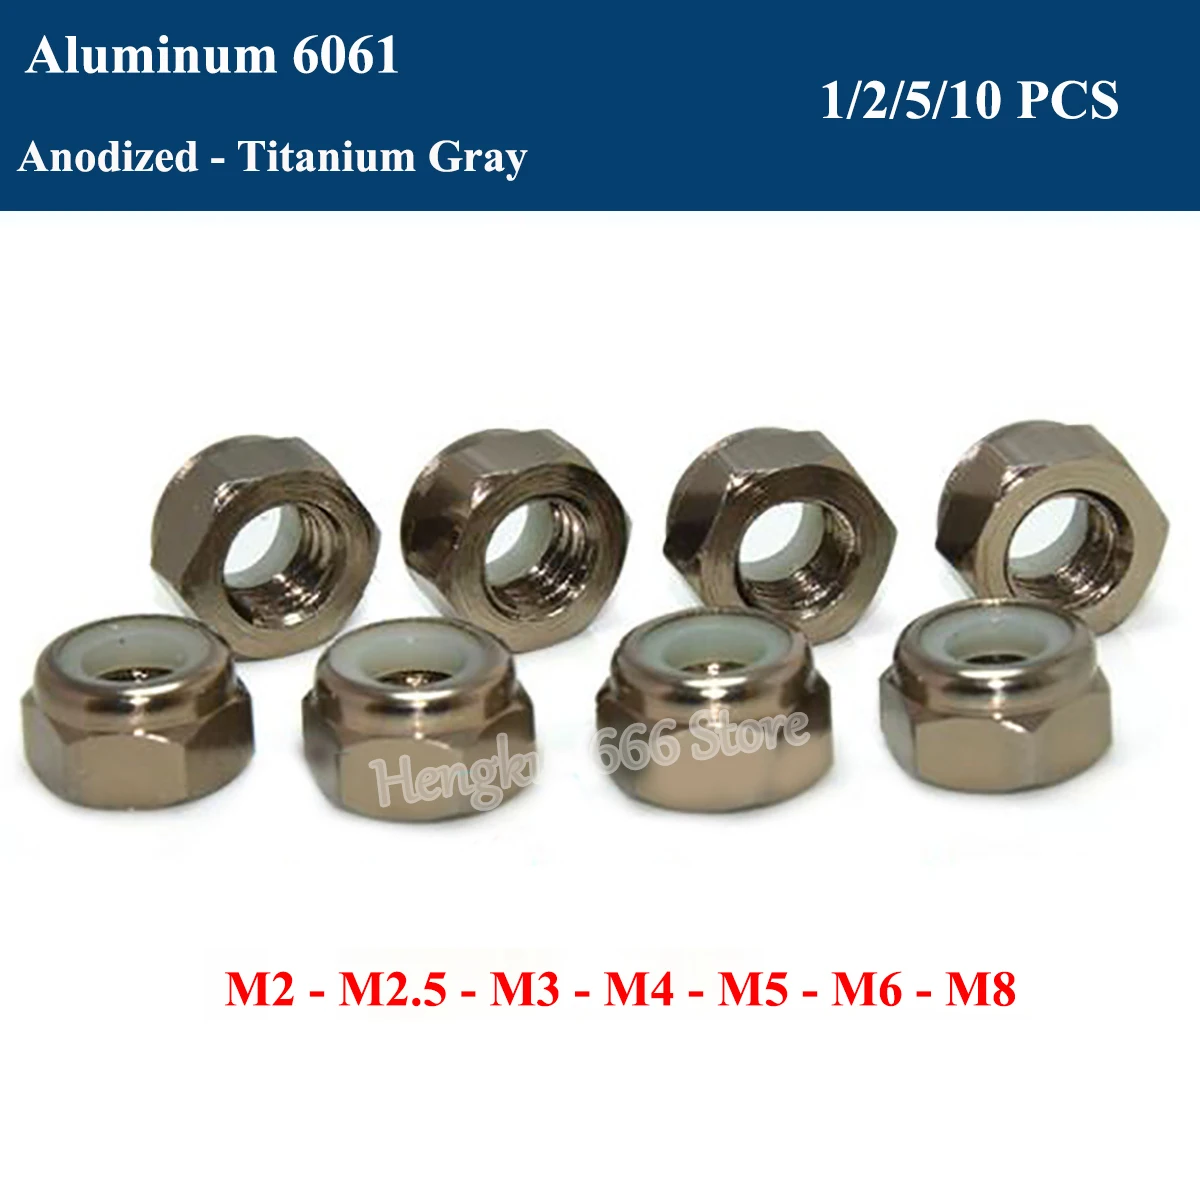 Anodized Aluminium Nylon Insert Hex Lock Nuts Colorful Self-lock Nuts M4/M5 